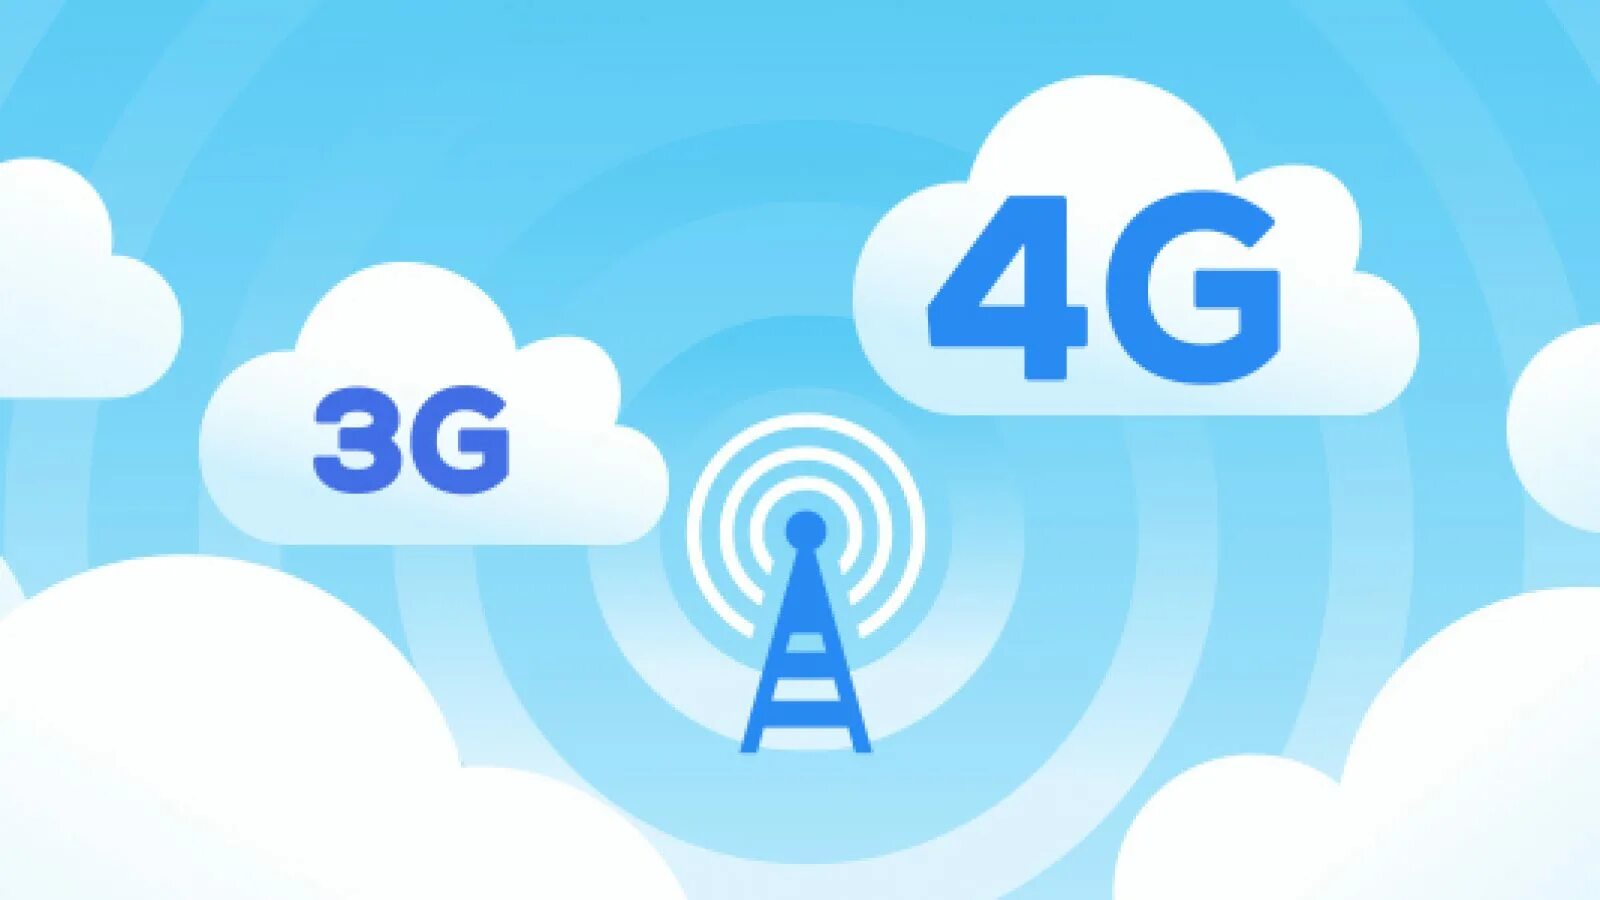 Pai 4g 4g. 3g 4g. 3g интернет. Мобильный интернет 4g. Значок 3g.